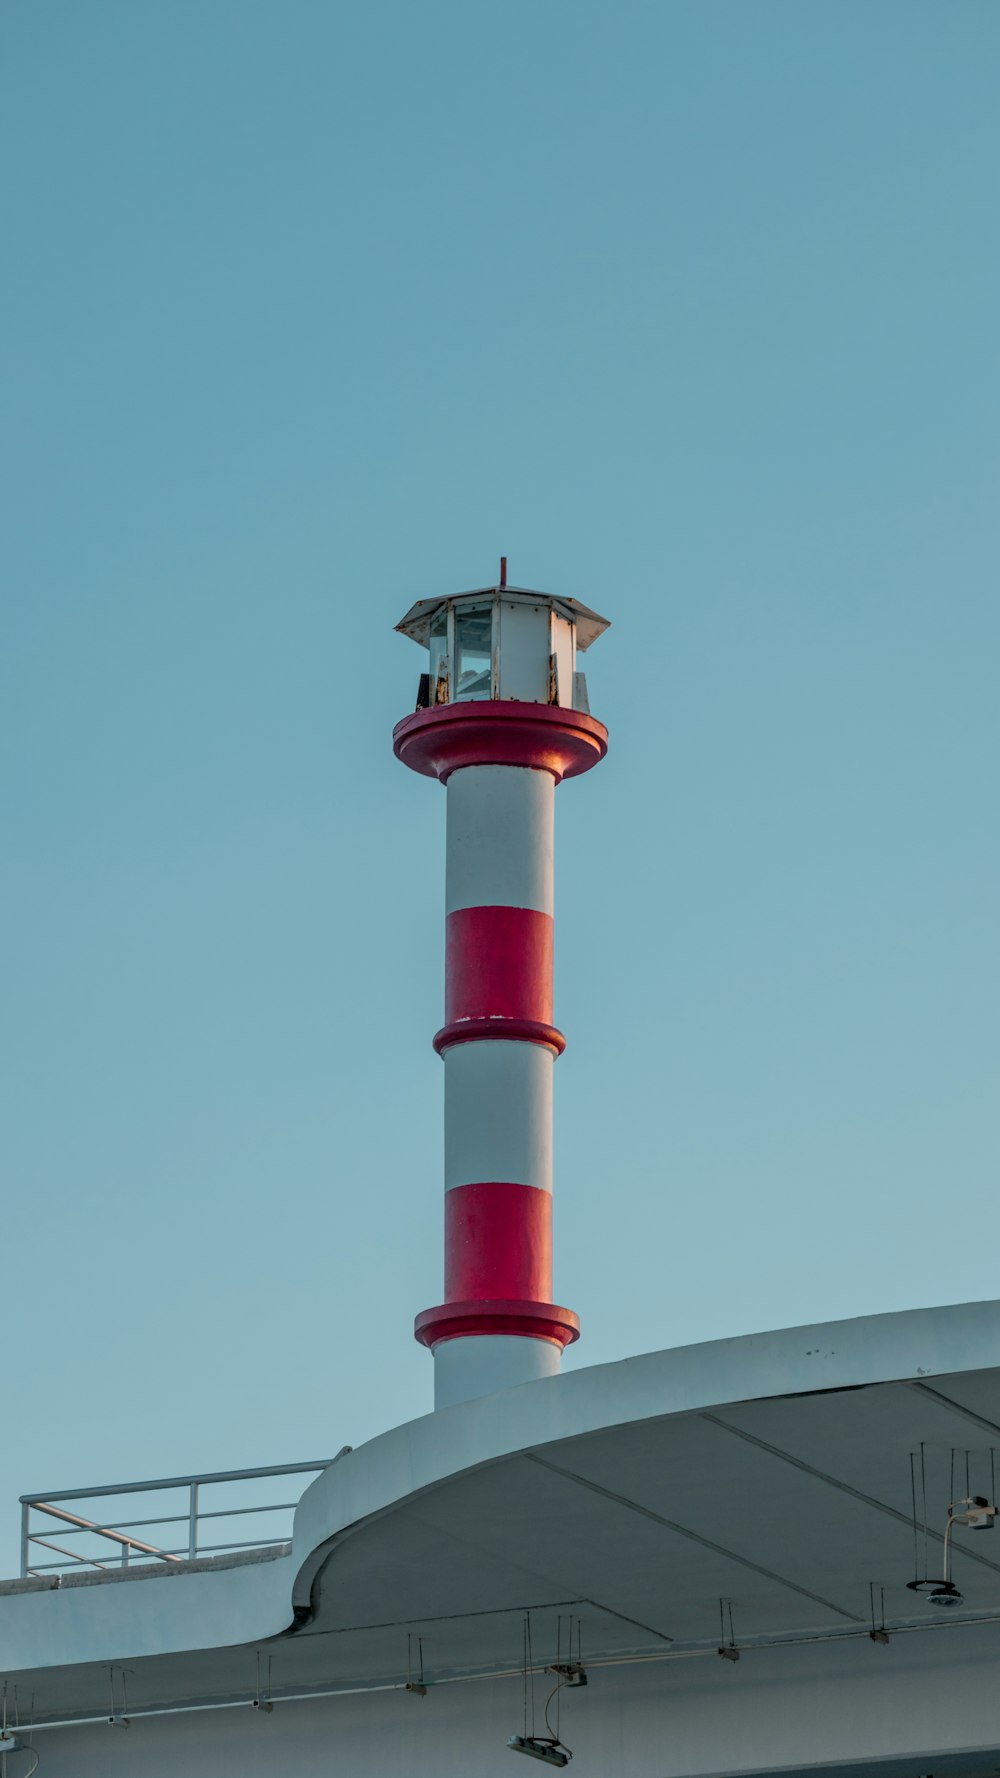 a lighthouse on a ship